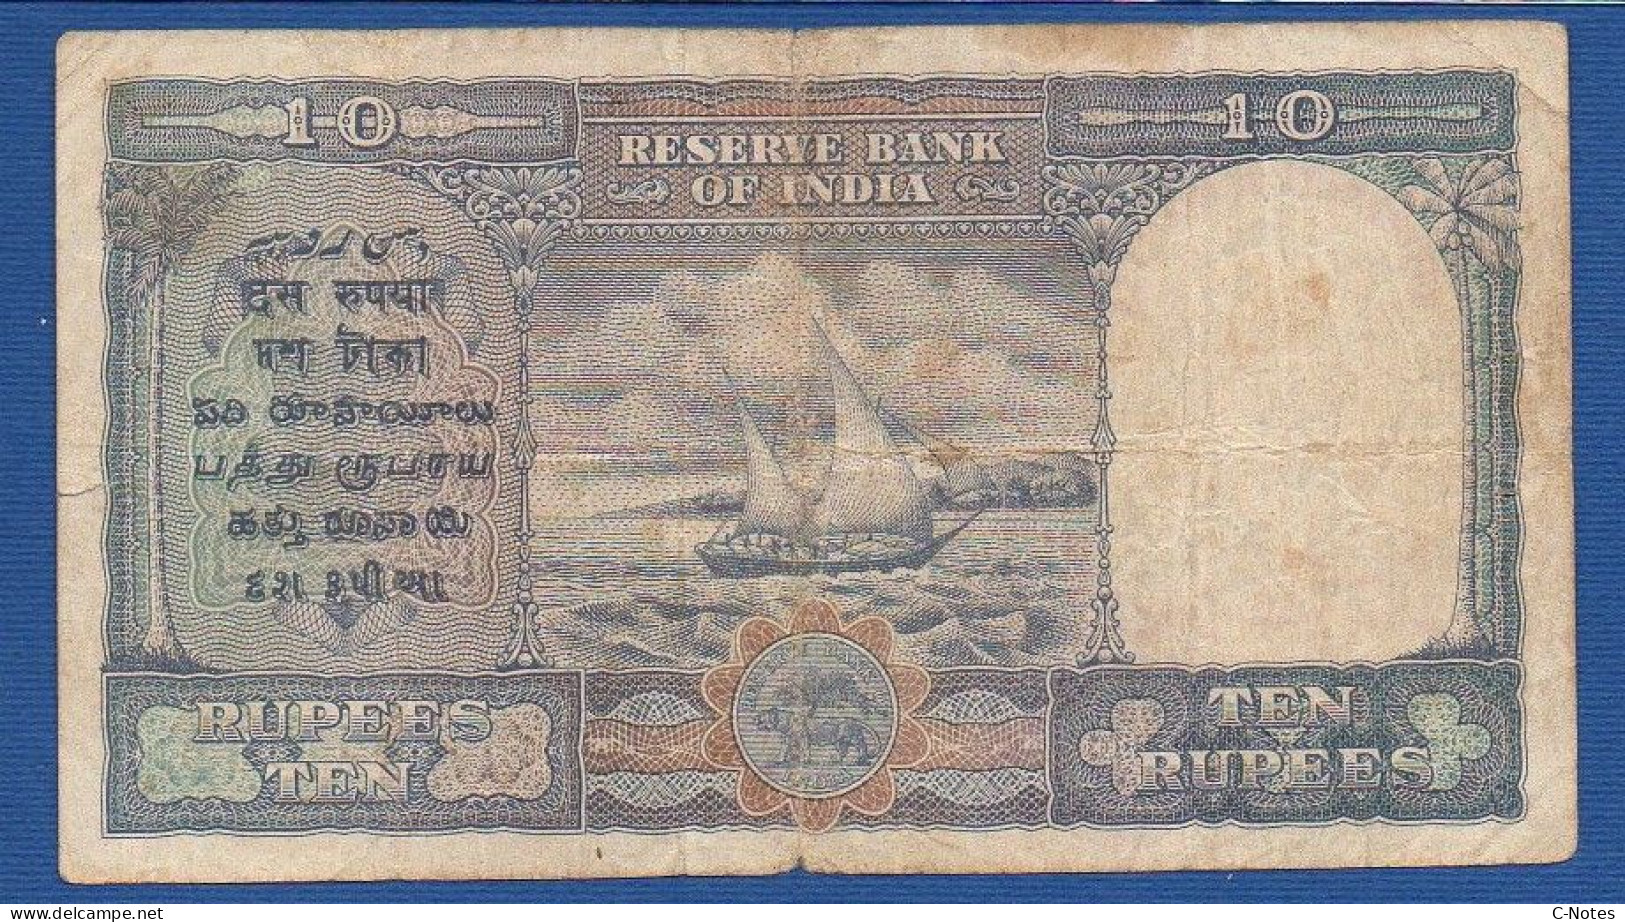 PAKISTAN - P. 3 – 10 Rupees ND (1948) F/VF, S/n J4 326255 "George VI Provisional Overprint" Issue - Pakistan